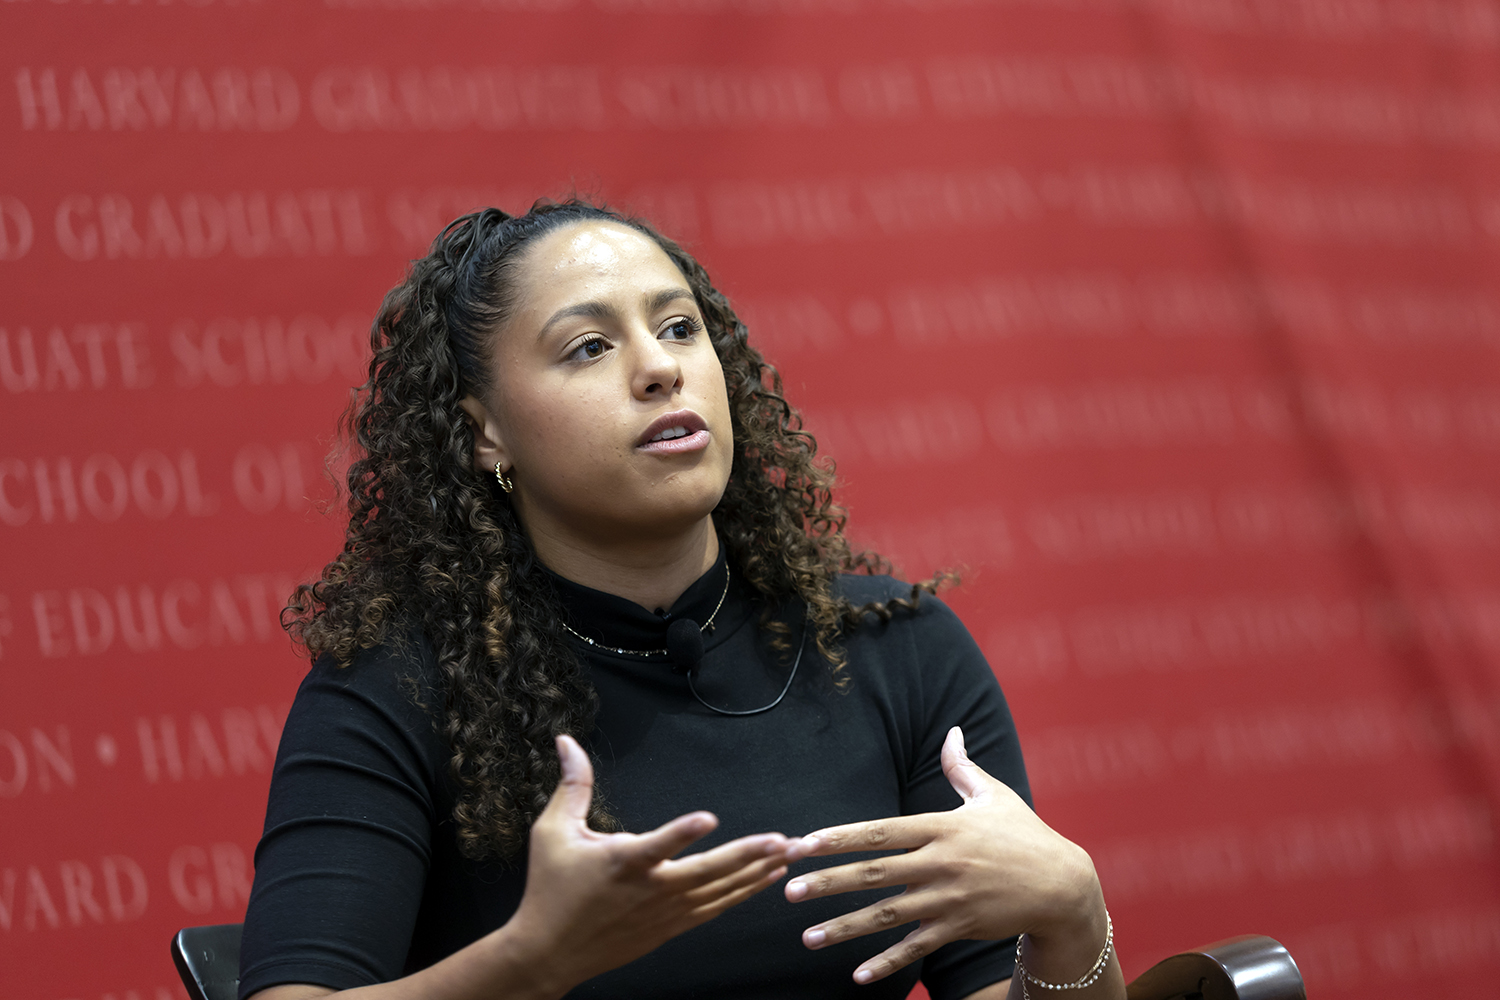 Harvard undergrad and Center for Digital Thriving researcher Destinee Ramos